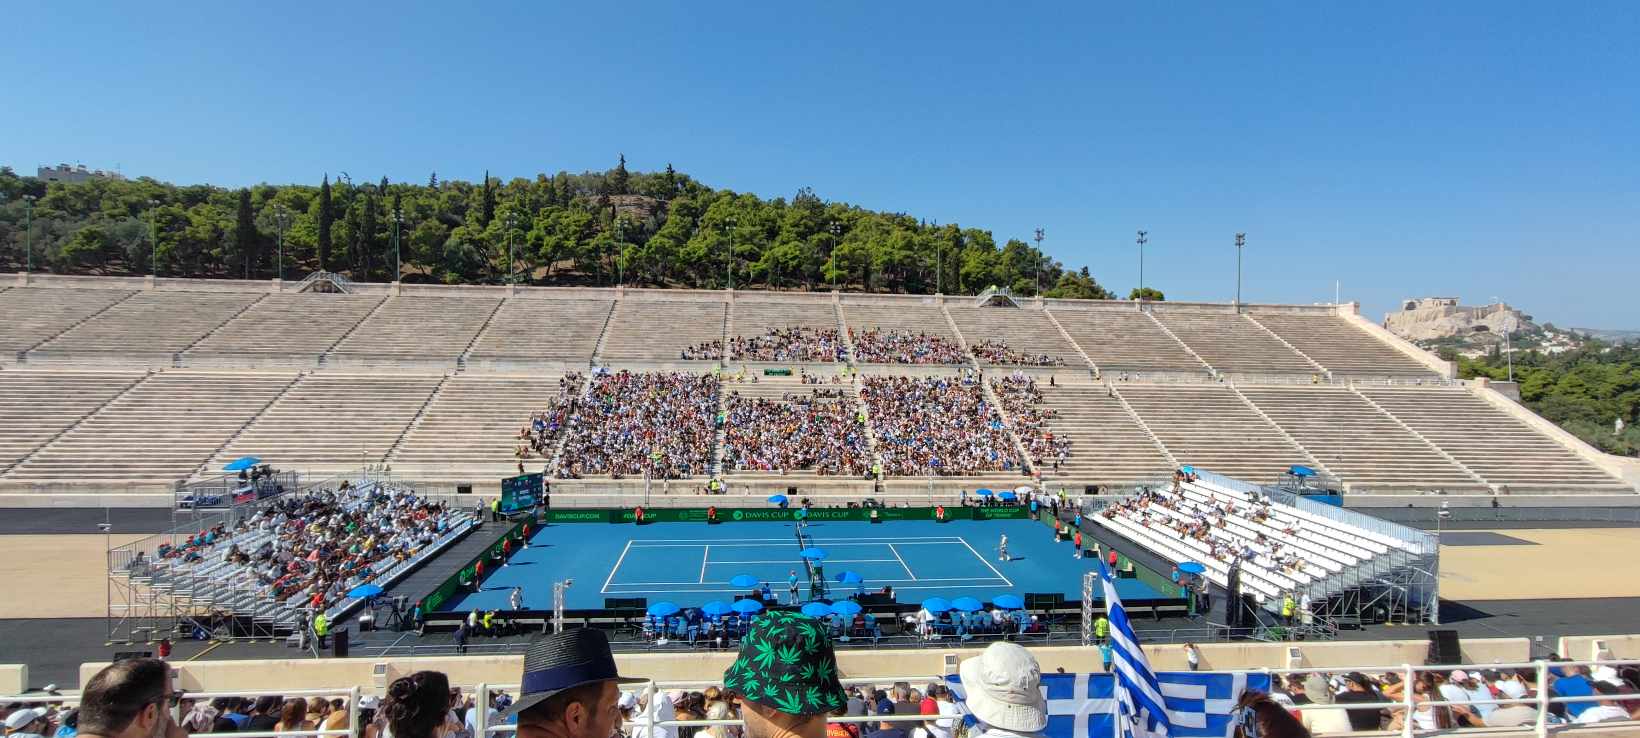 Live streaming oι ιστορικοί αγώνες τένις στο Καλλιμάρμαρο: Ελλάδα-Σλοβακία